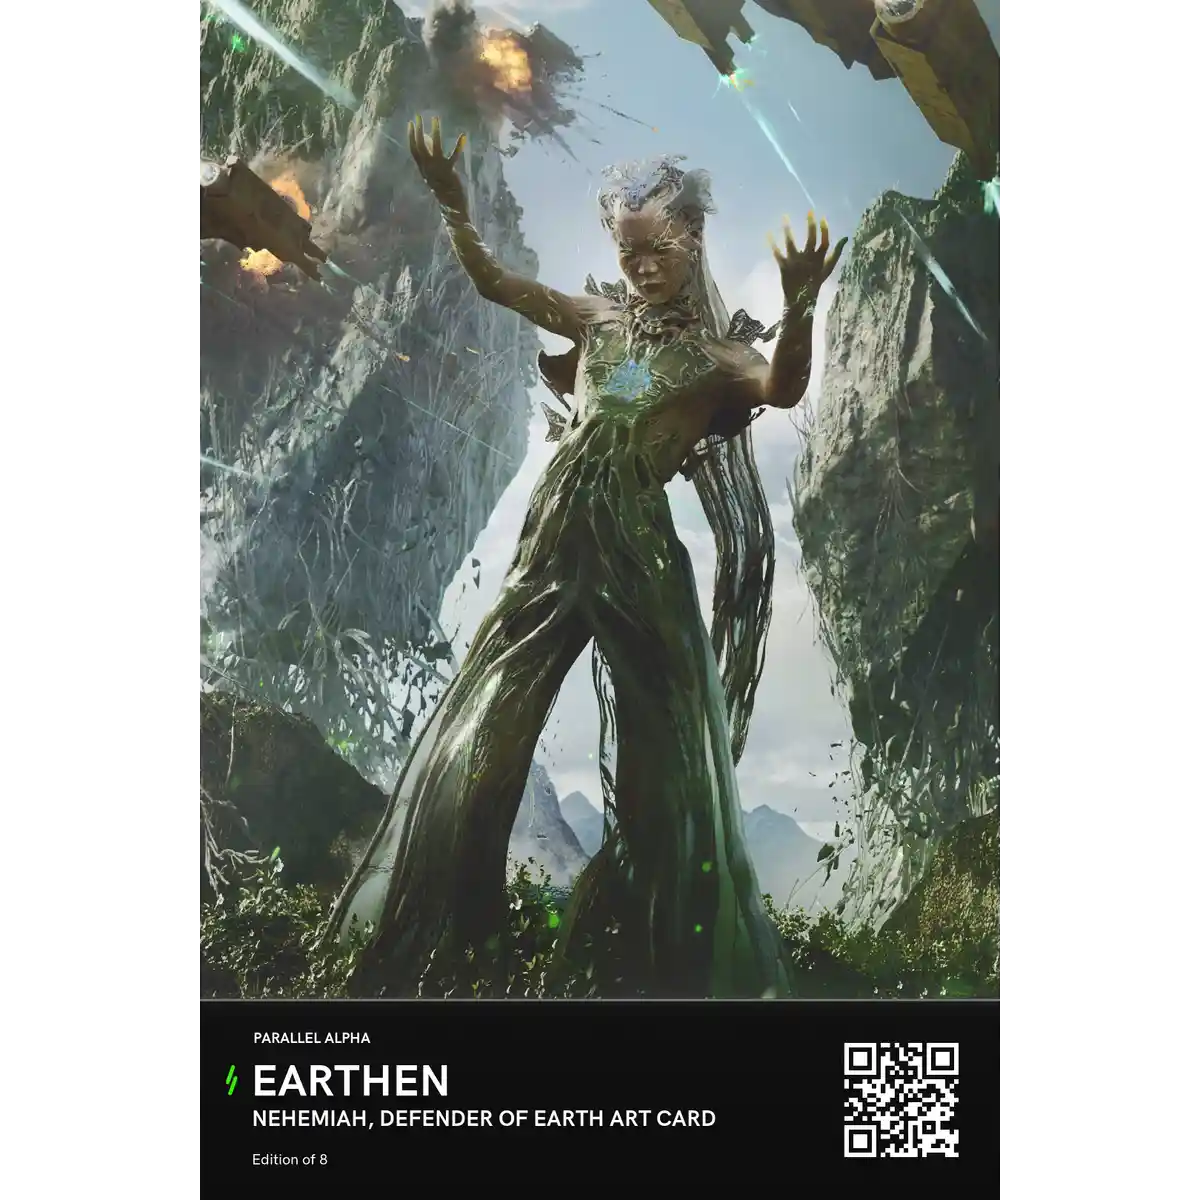 Nehemiah, Defender of Earth Art Card